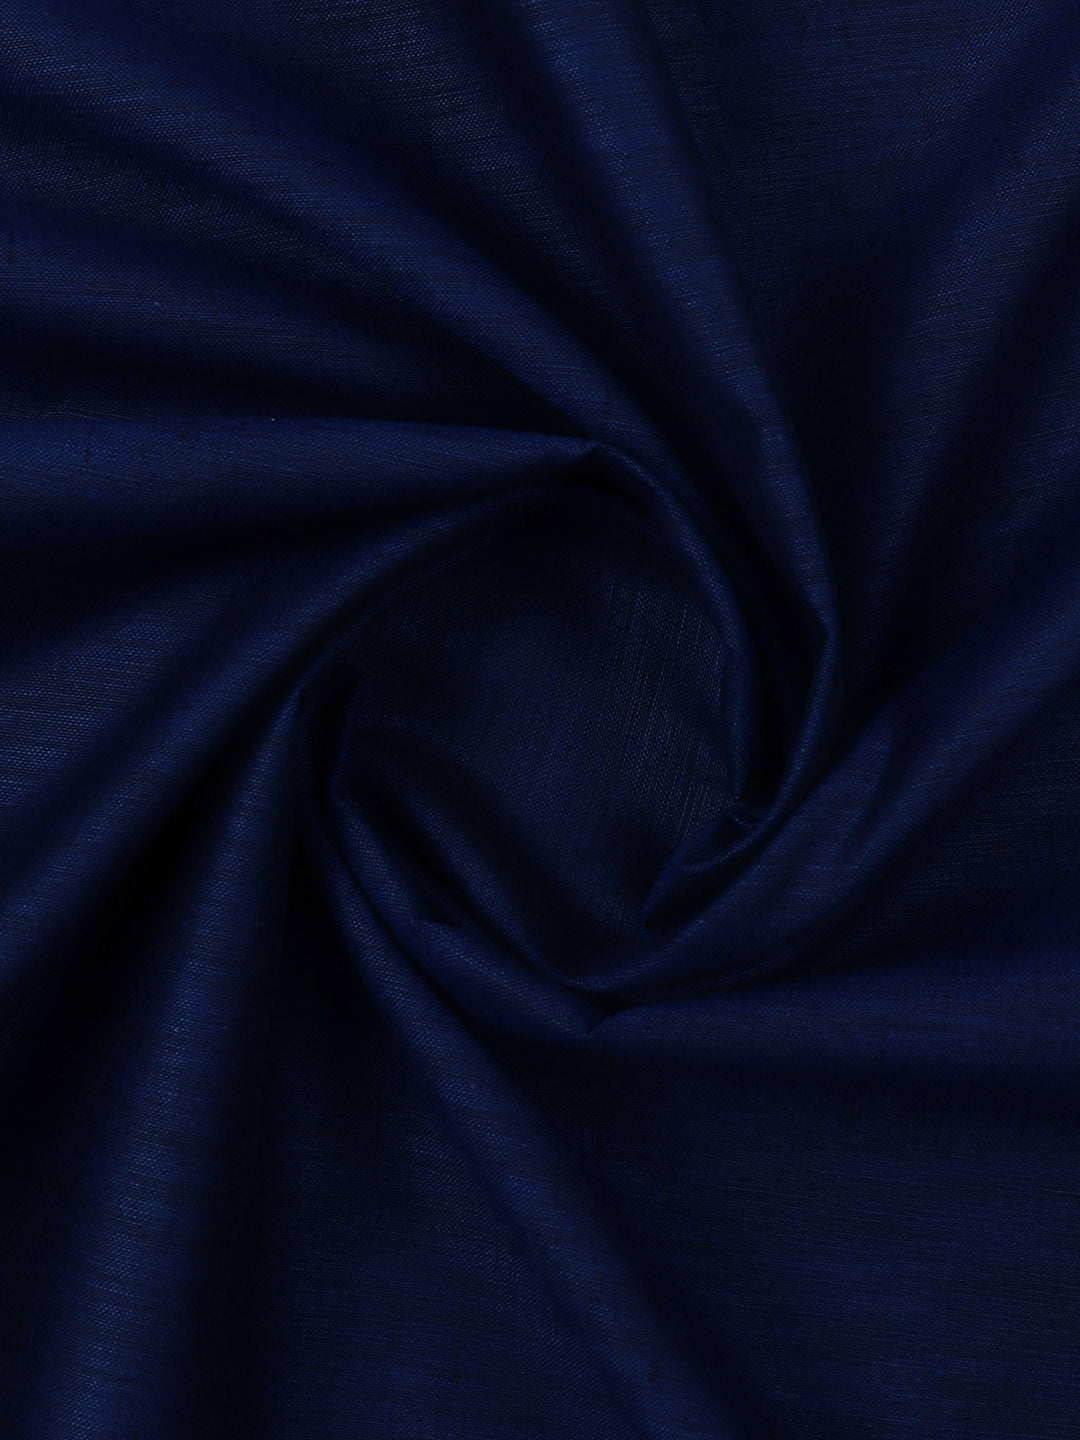 Cotton Blend Dark Blue Colour Plain Shirt Fabric Infinity